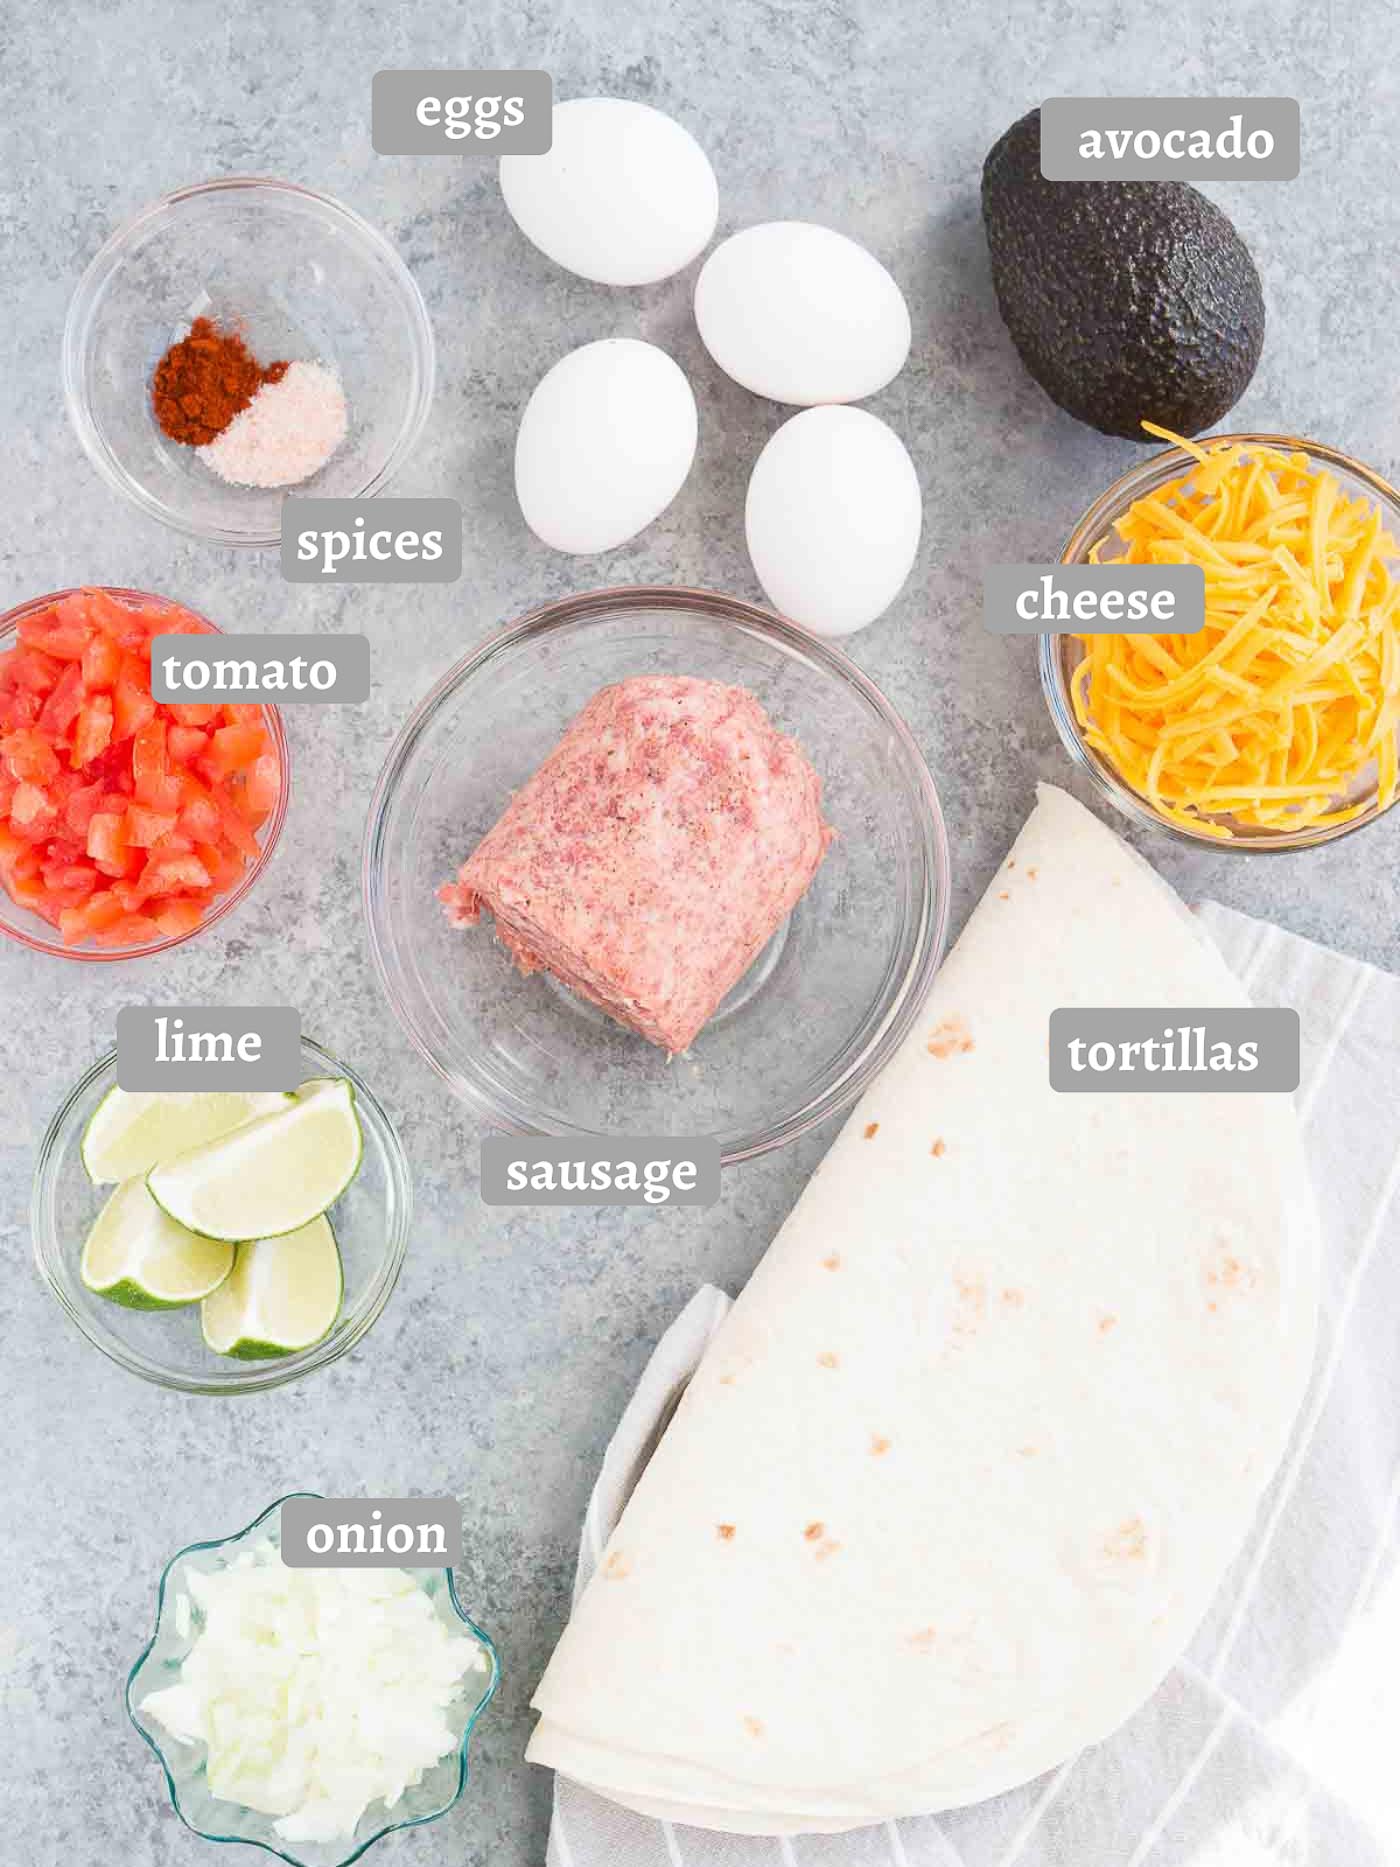 ingredients for making breakfast burrito